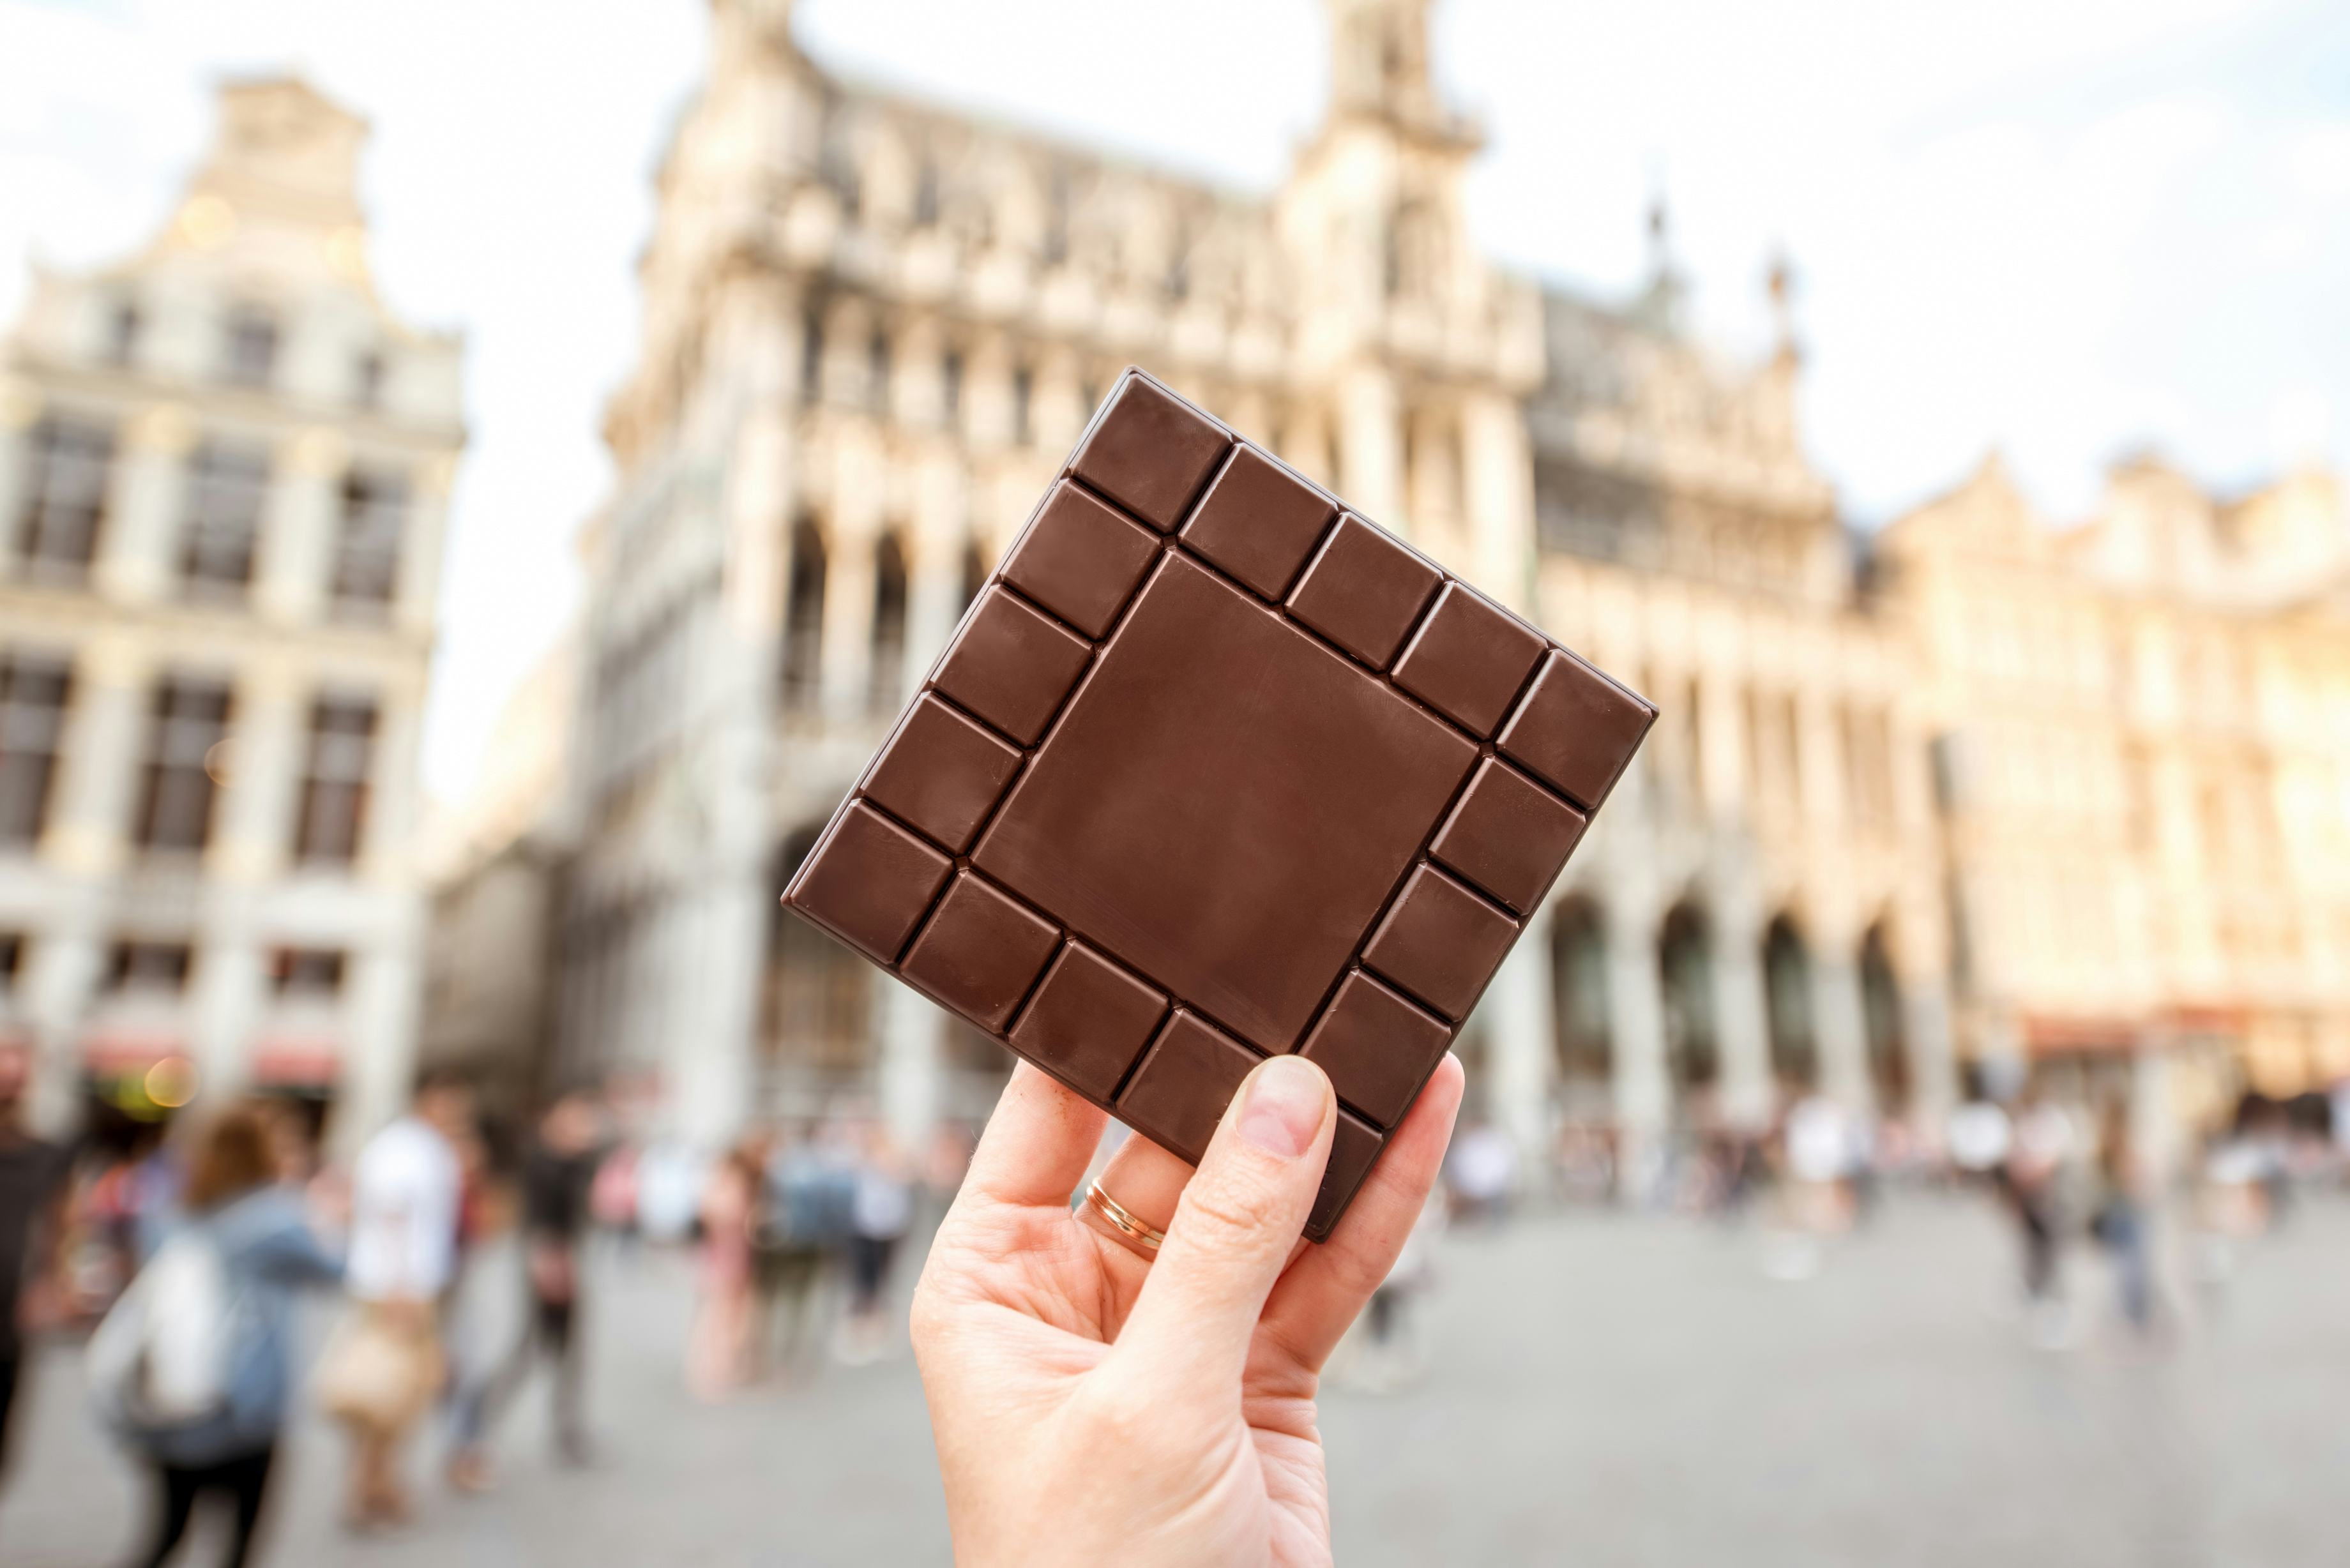 Milk chocolate square being held up in Brussels, Belgium